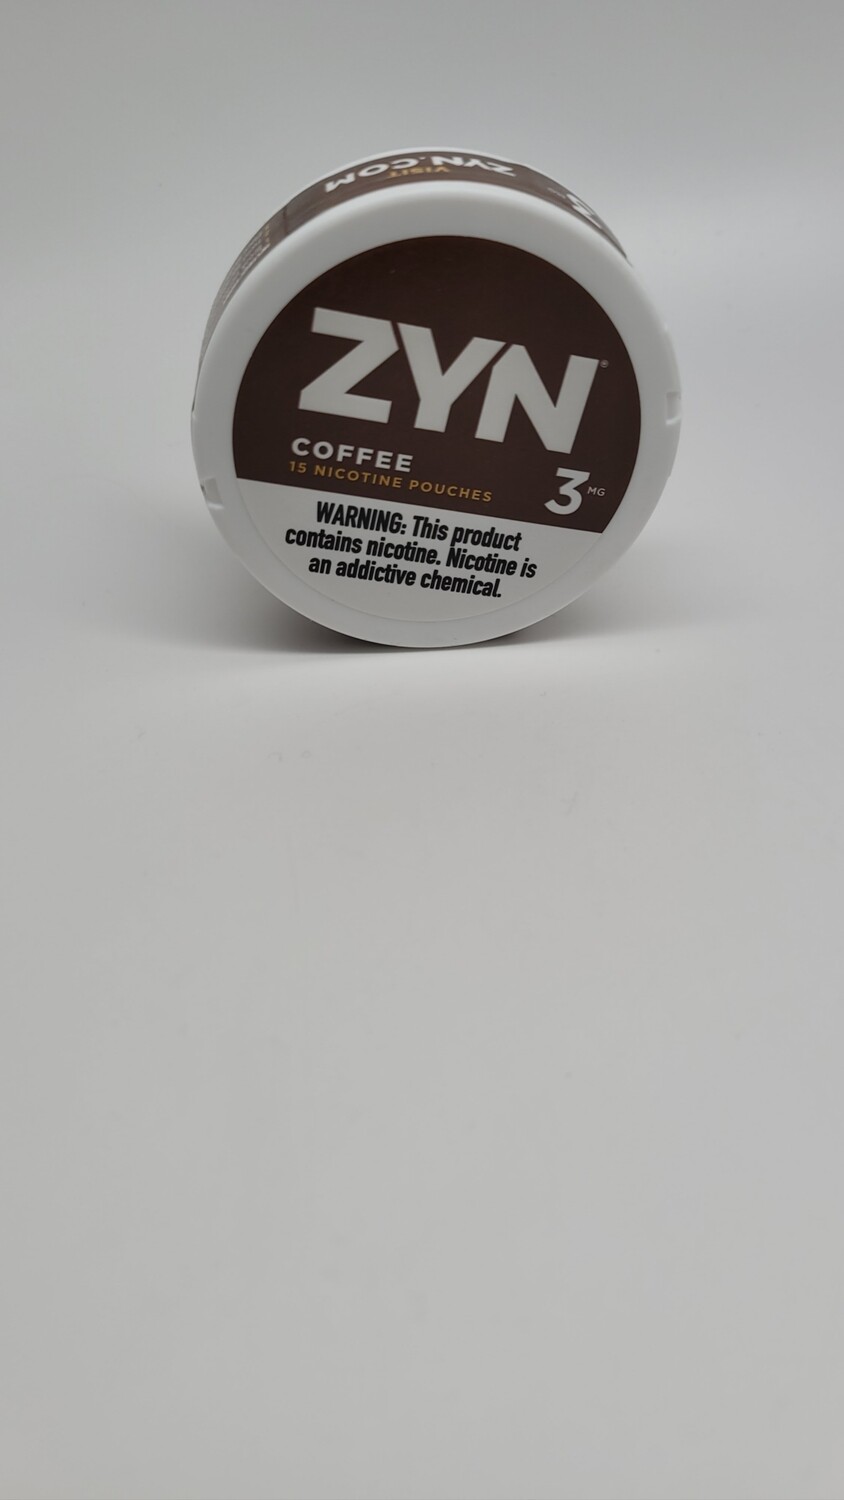 Zyn Nicotine Pouch 15ct Coffee